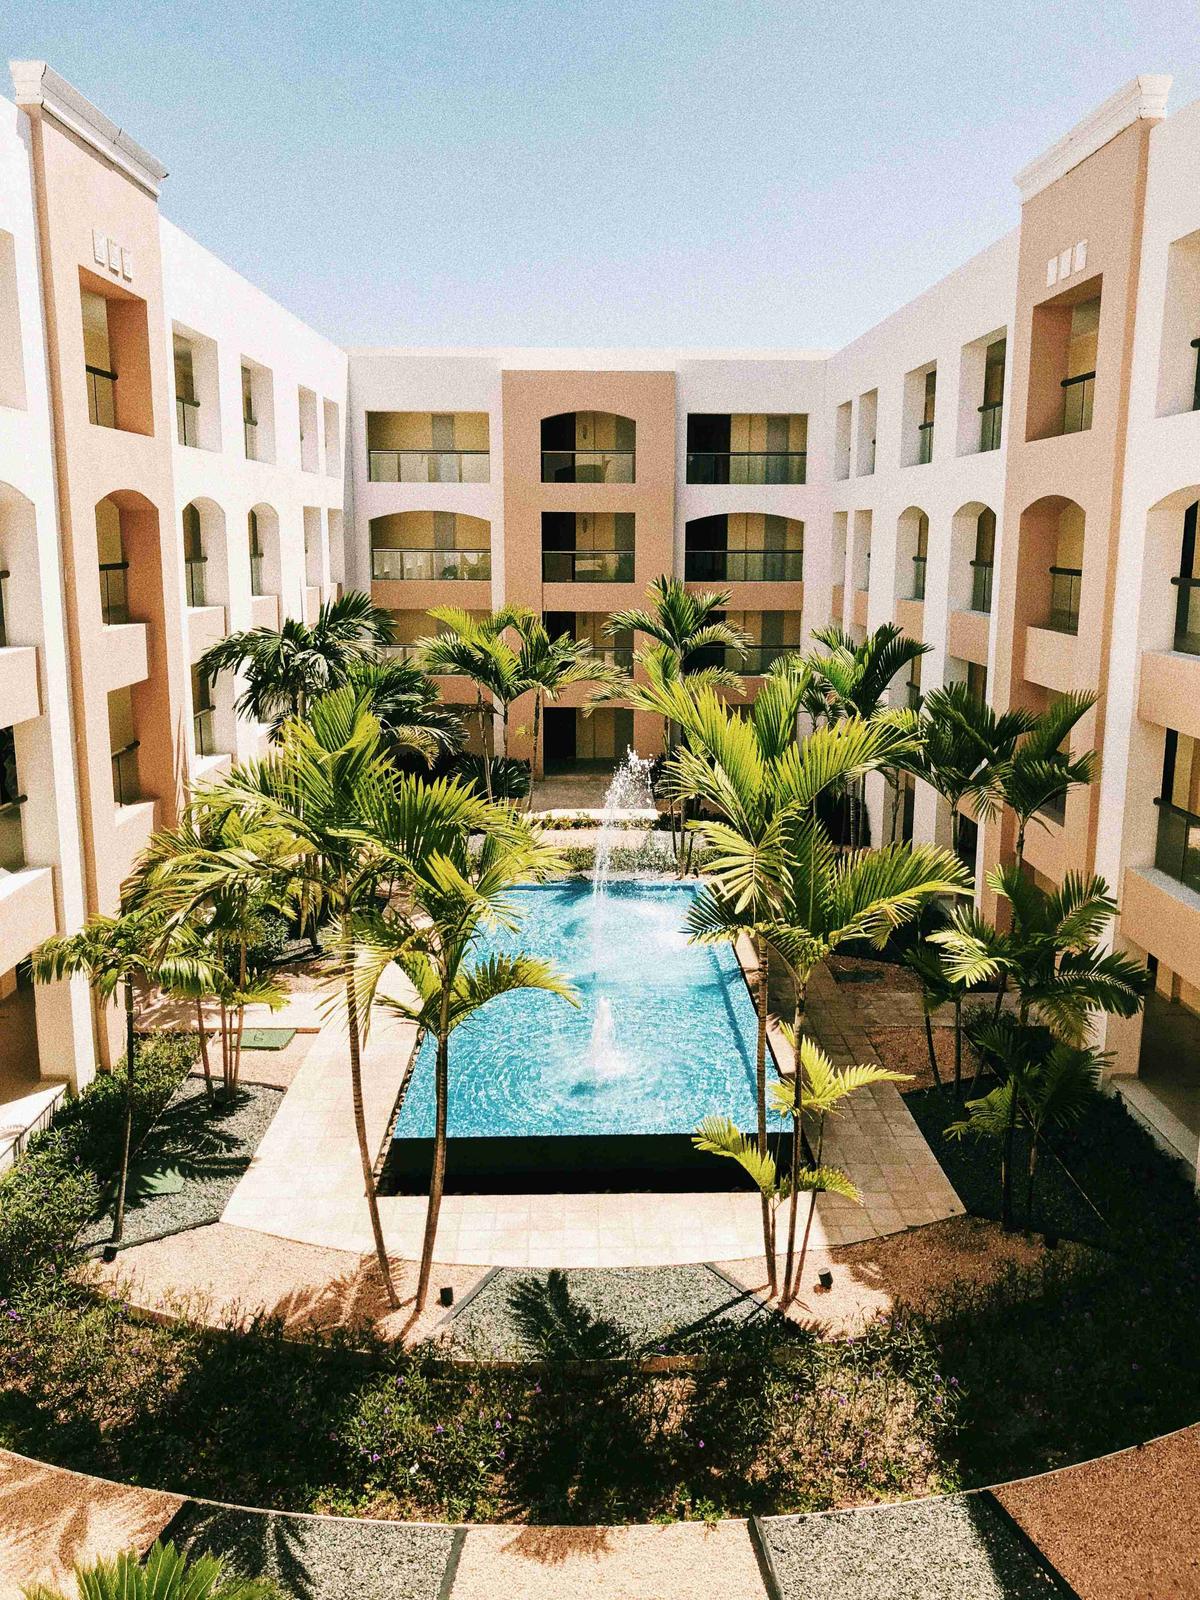 Tropical Courtyard Pool Oasis